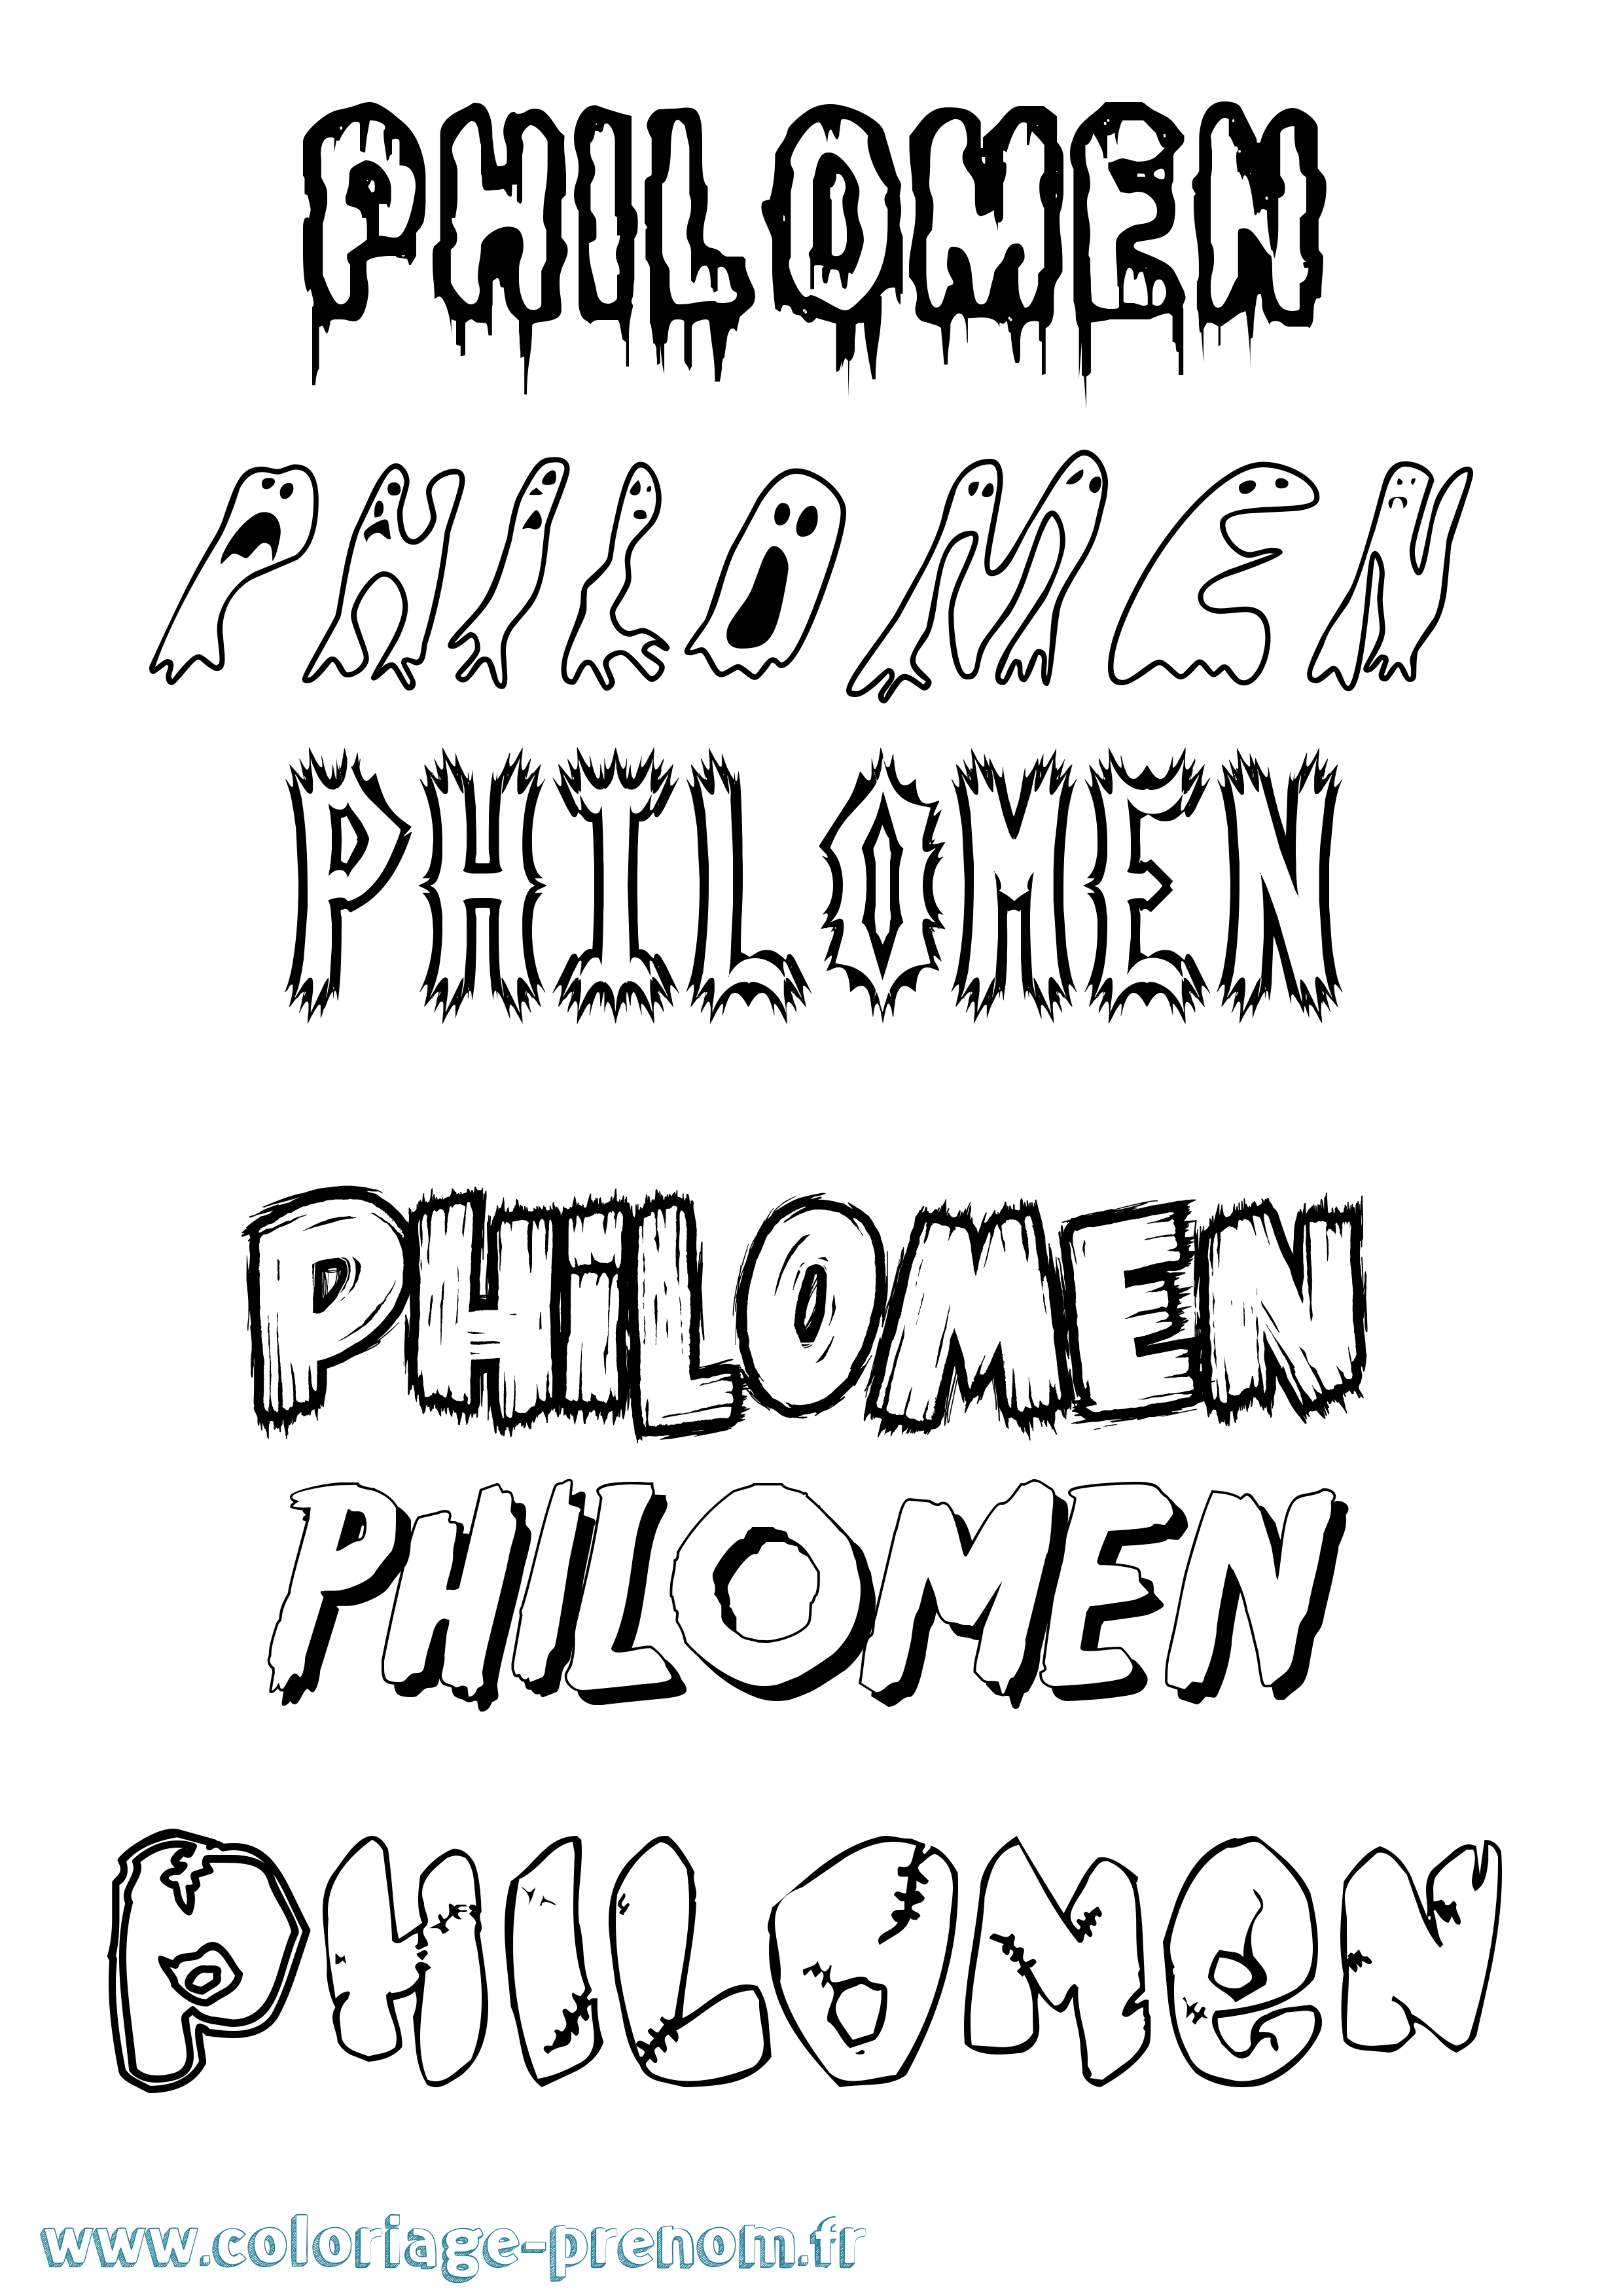 Coloriage prénom Philomen Frisson